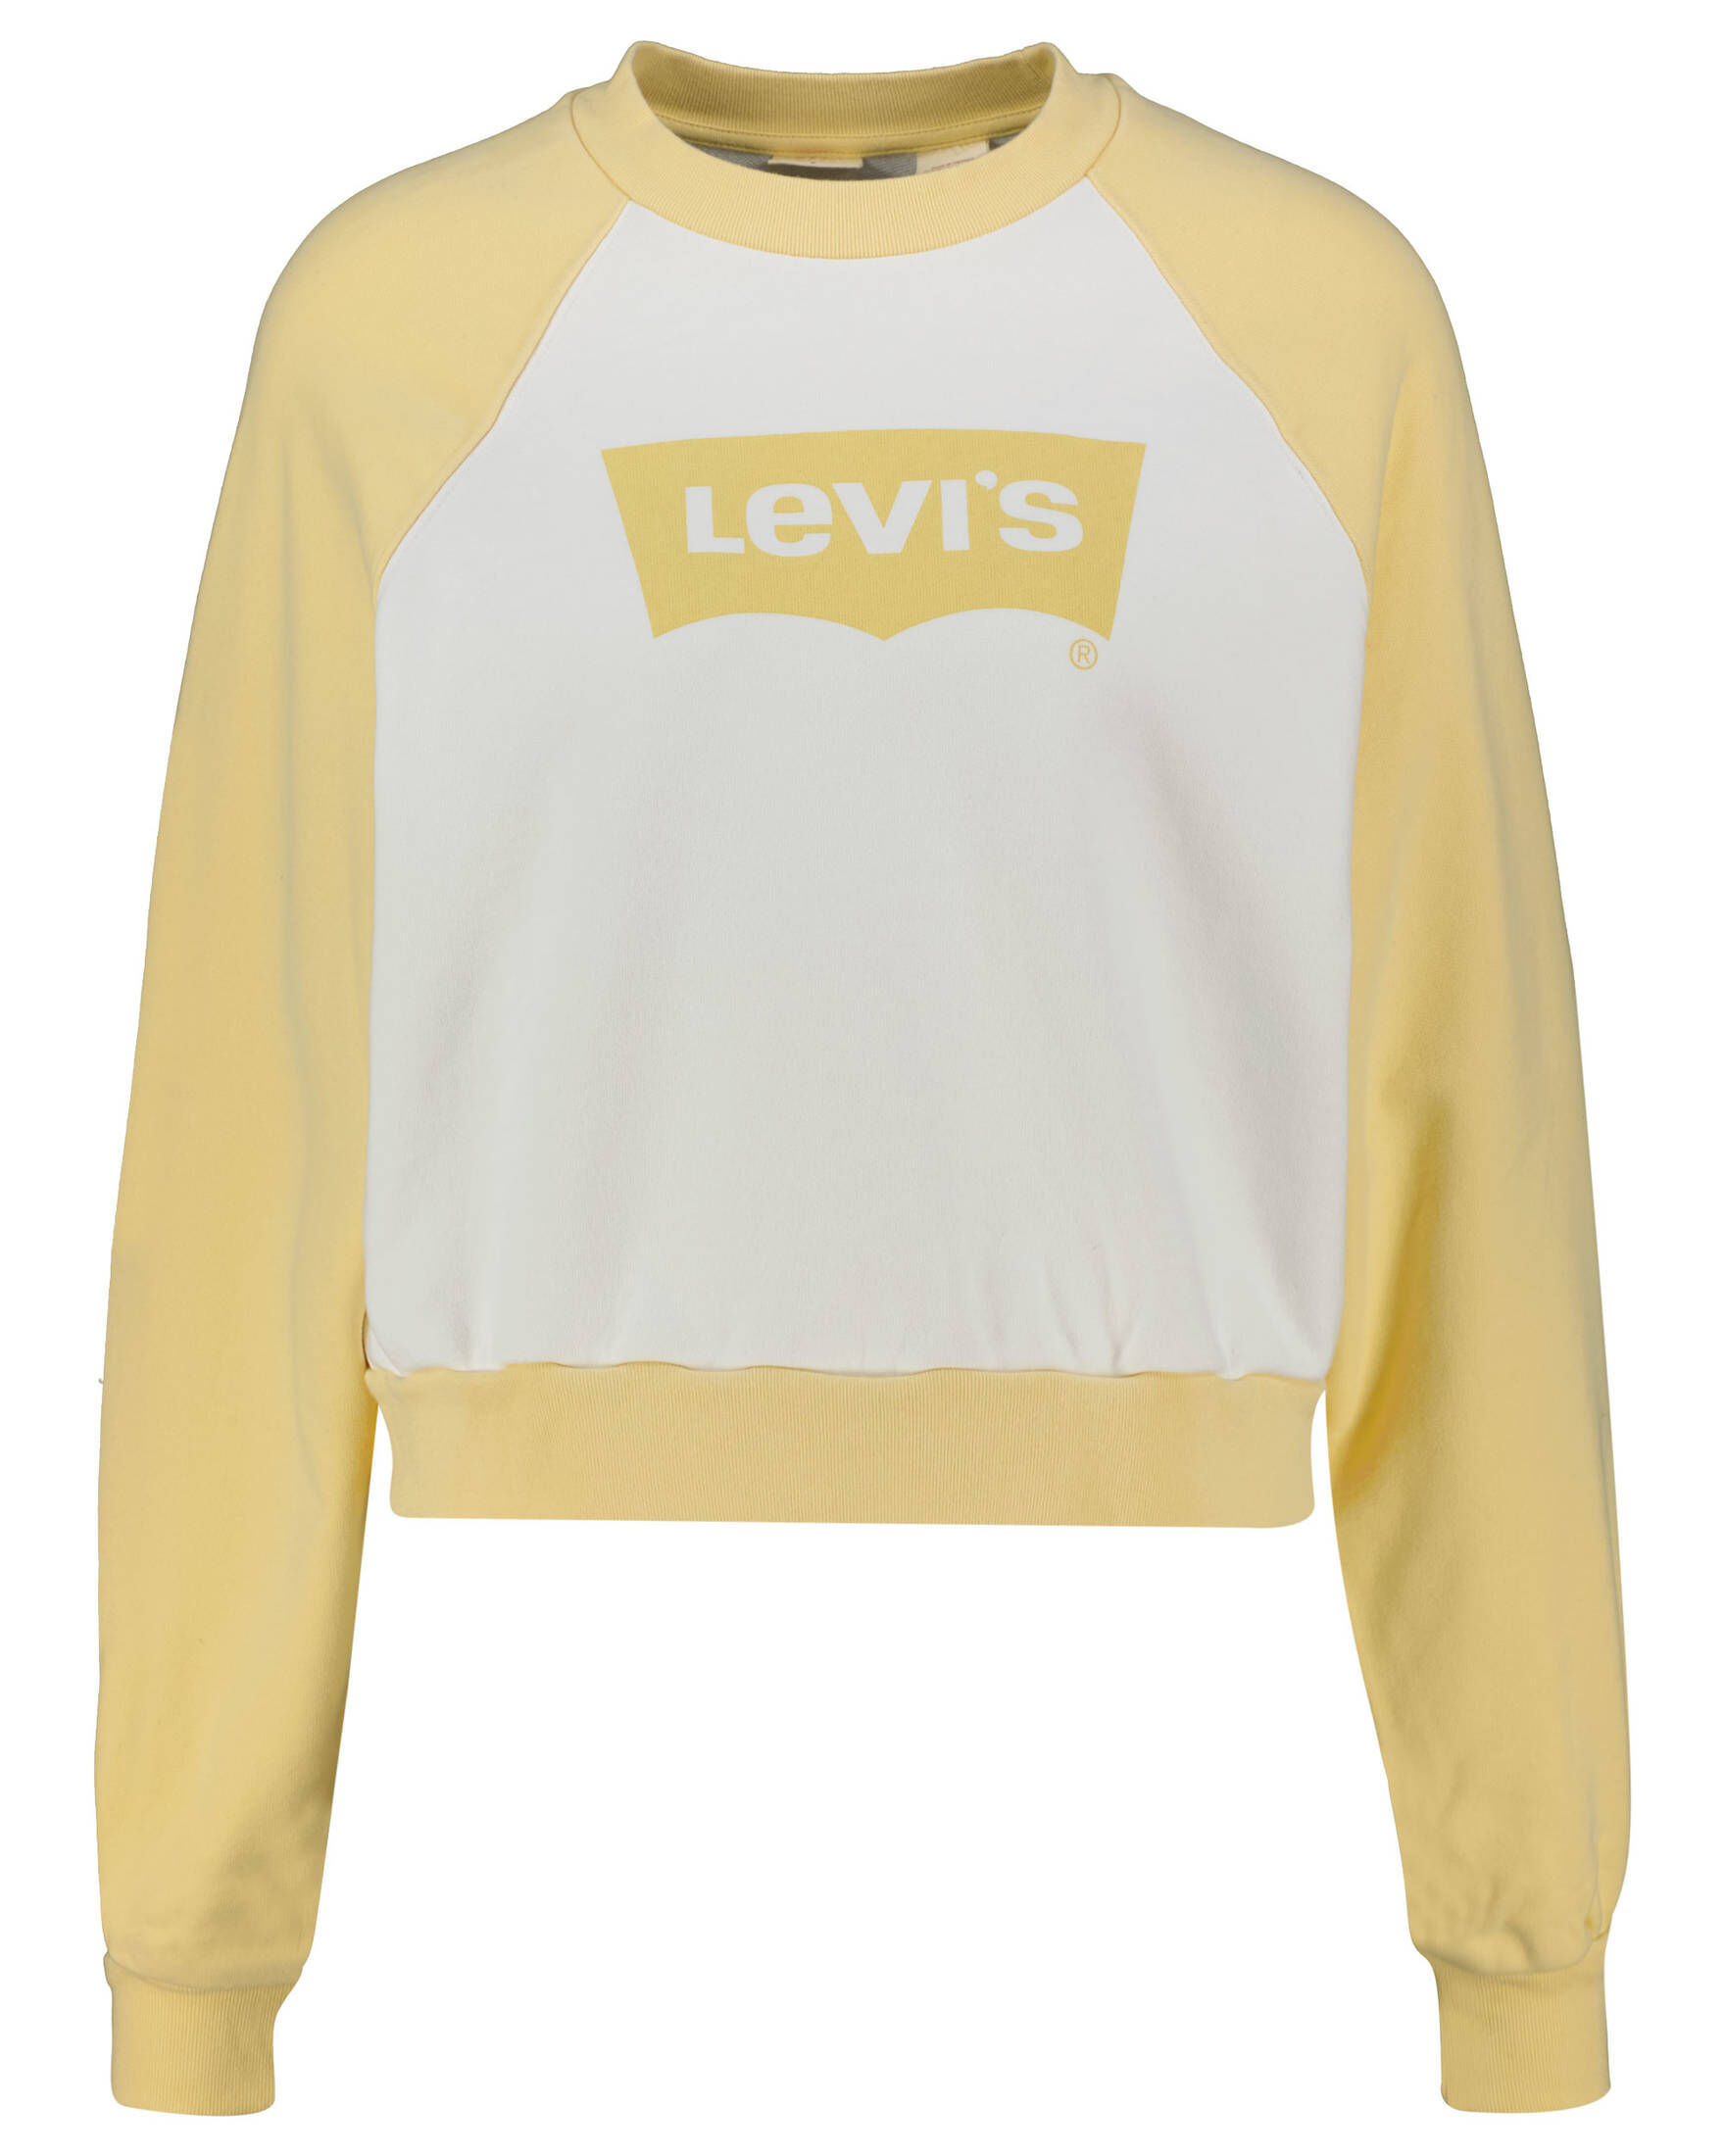 Levi's® Damen Sweatshirt VINTAGE RAGLAN CREW CREW ORANG kaufen | engelhorn